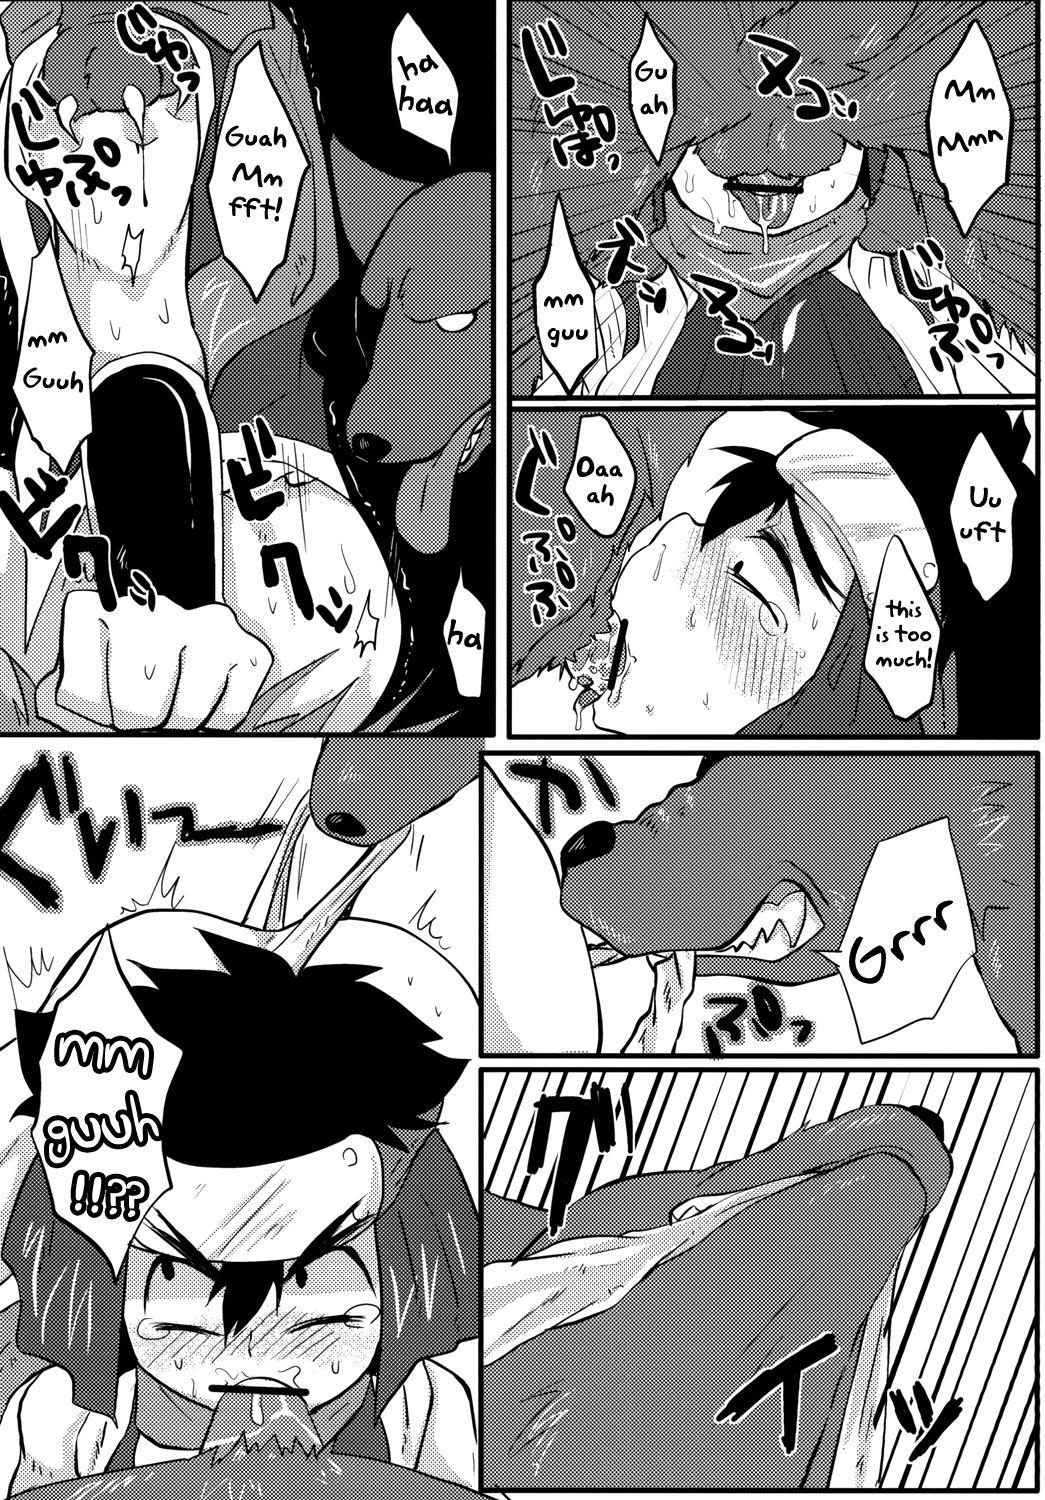 Nurumassage Hagakurape!! - Battle spirits Porno - Page 7